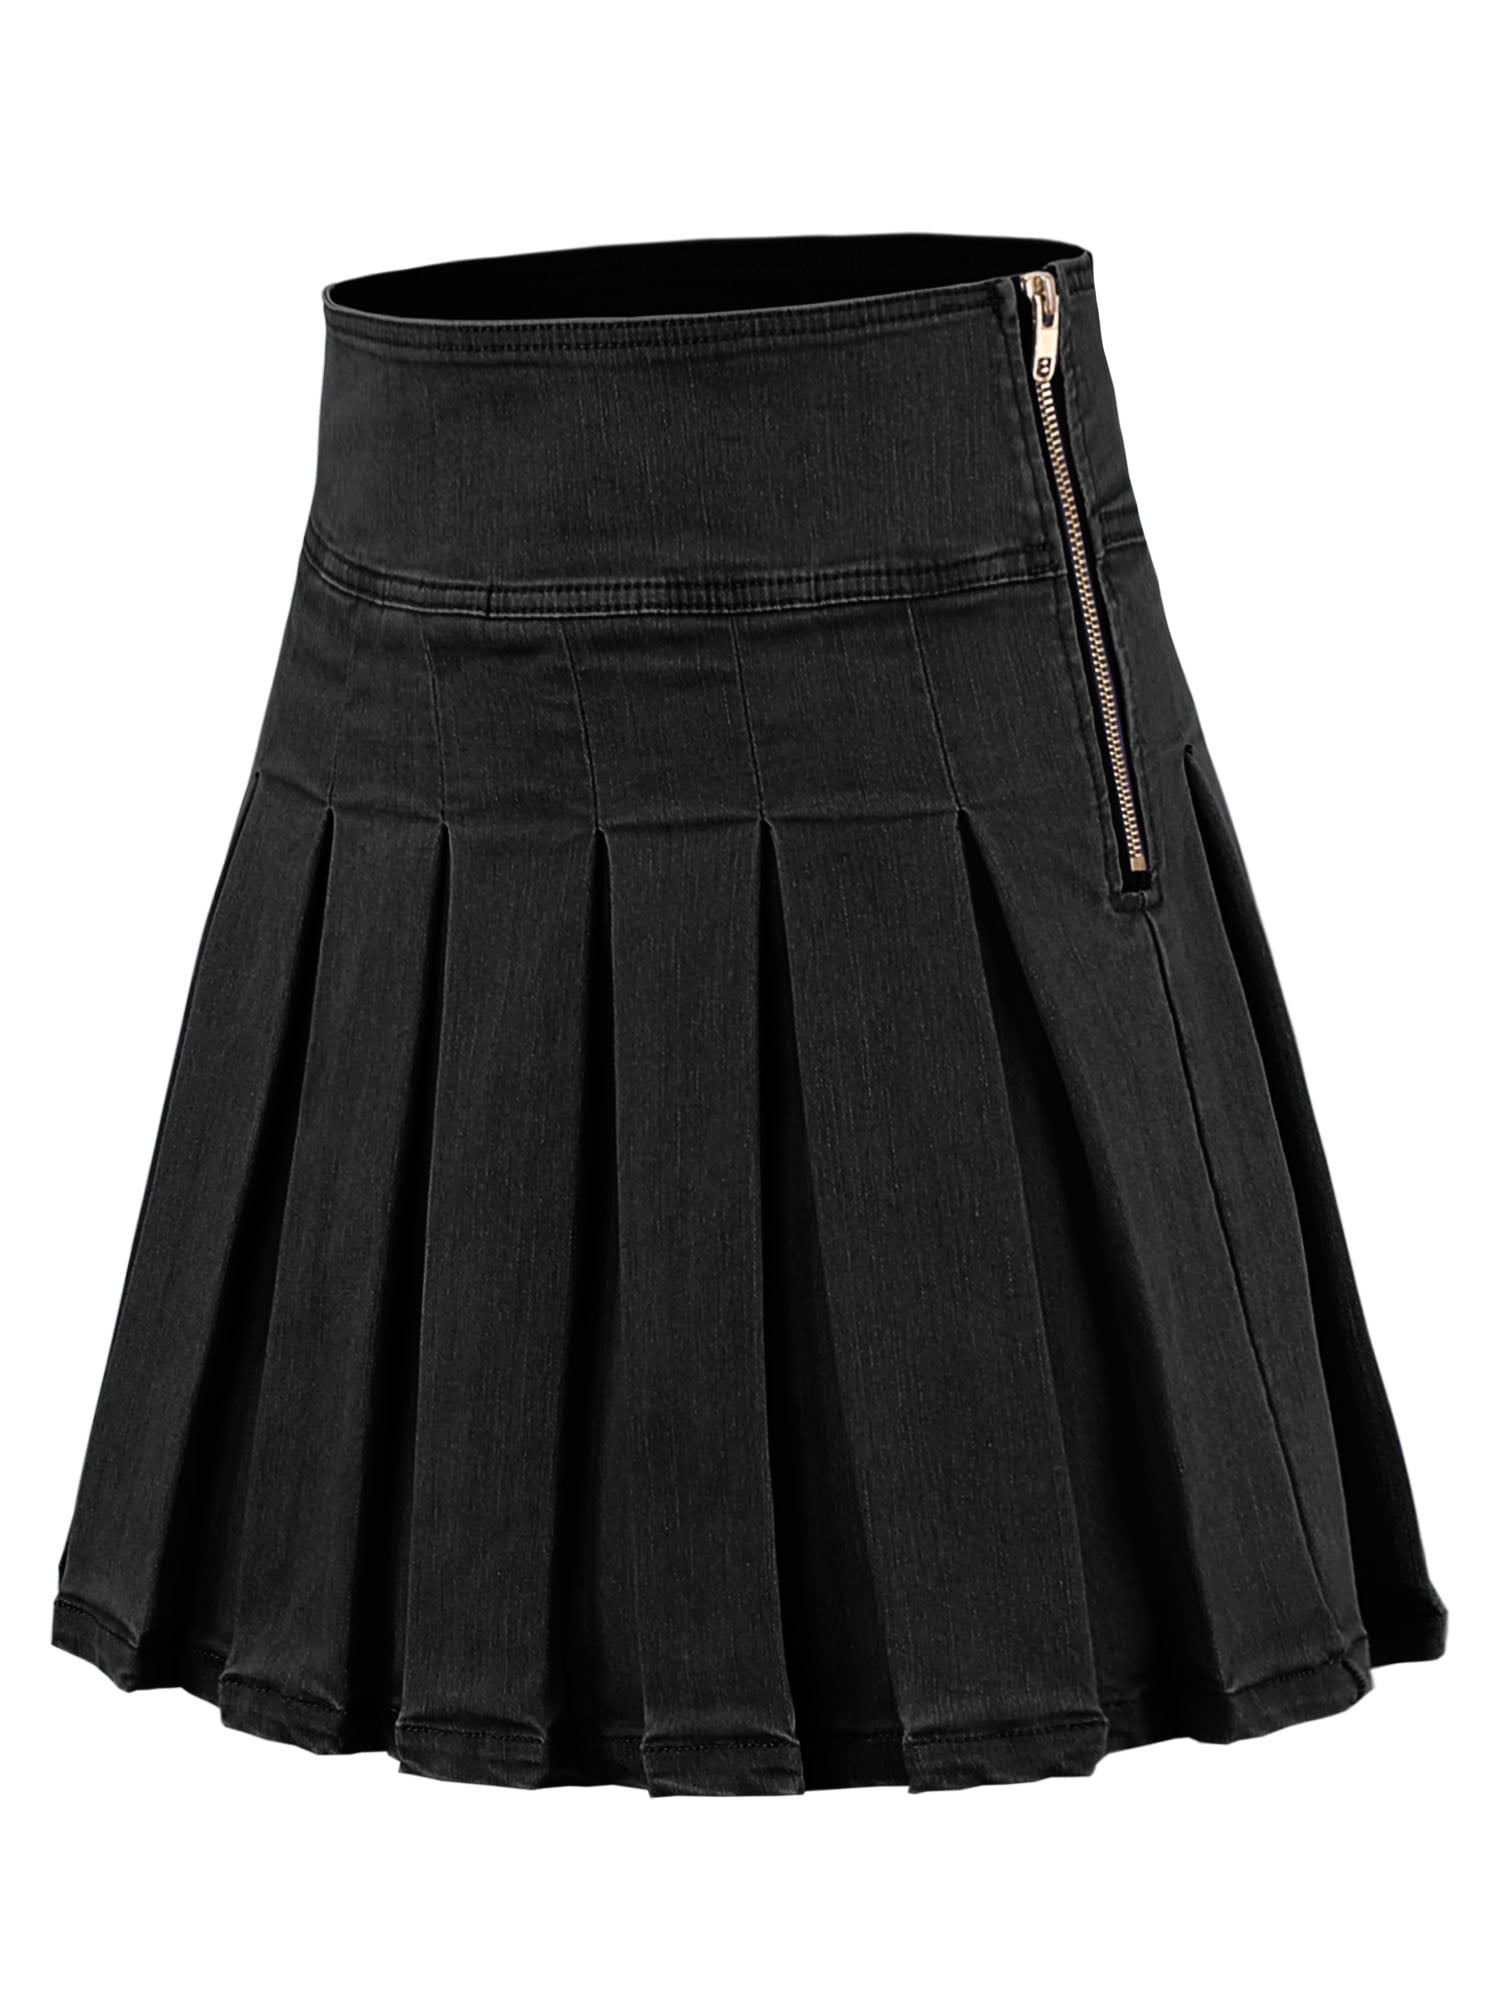 Buy Black/White Check Ponte Jersey Mini Skirt from Next Germany